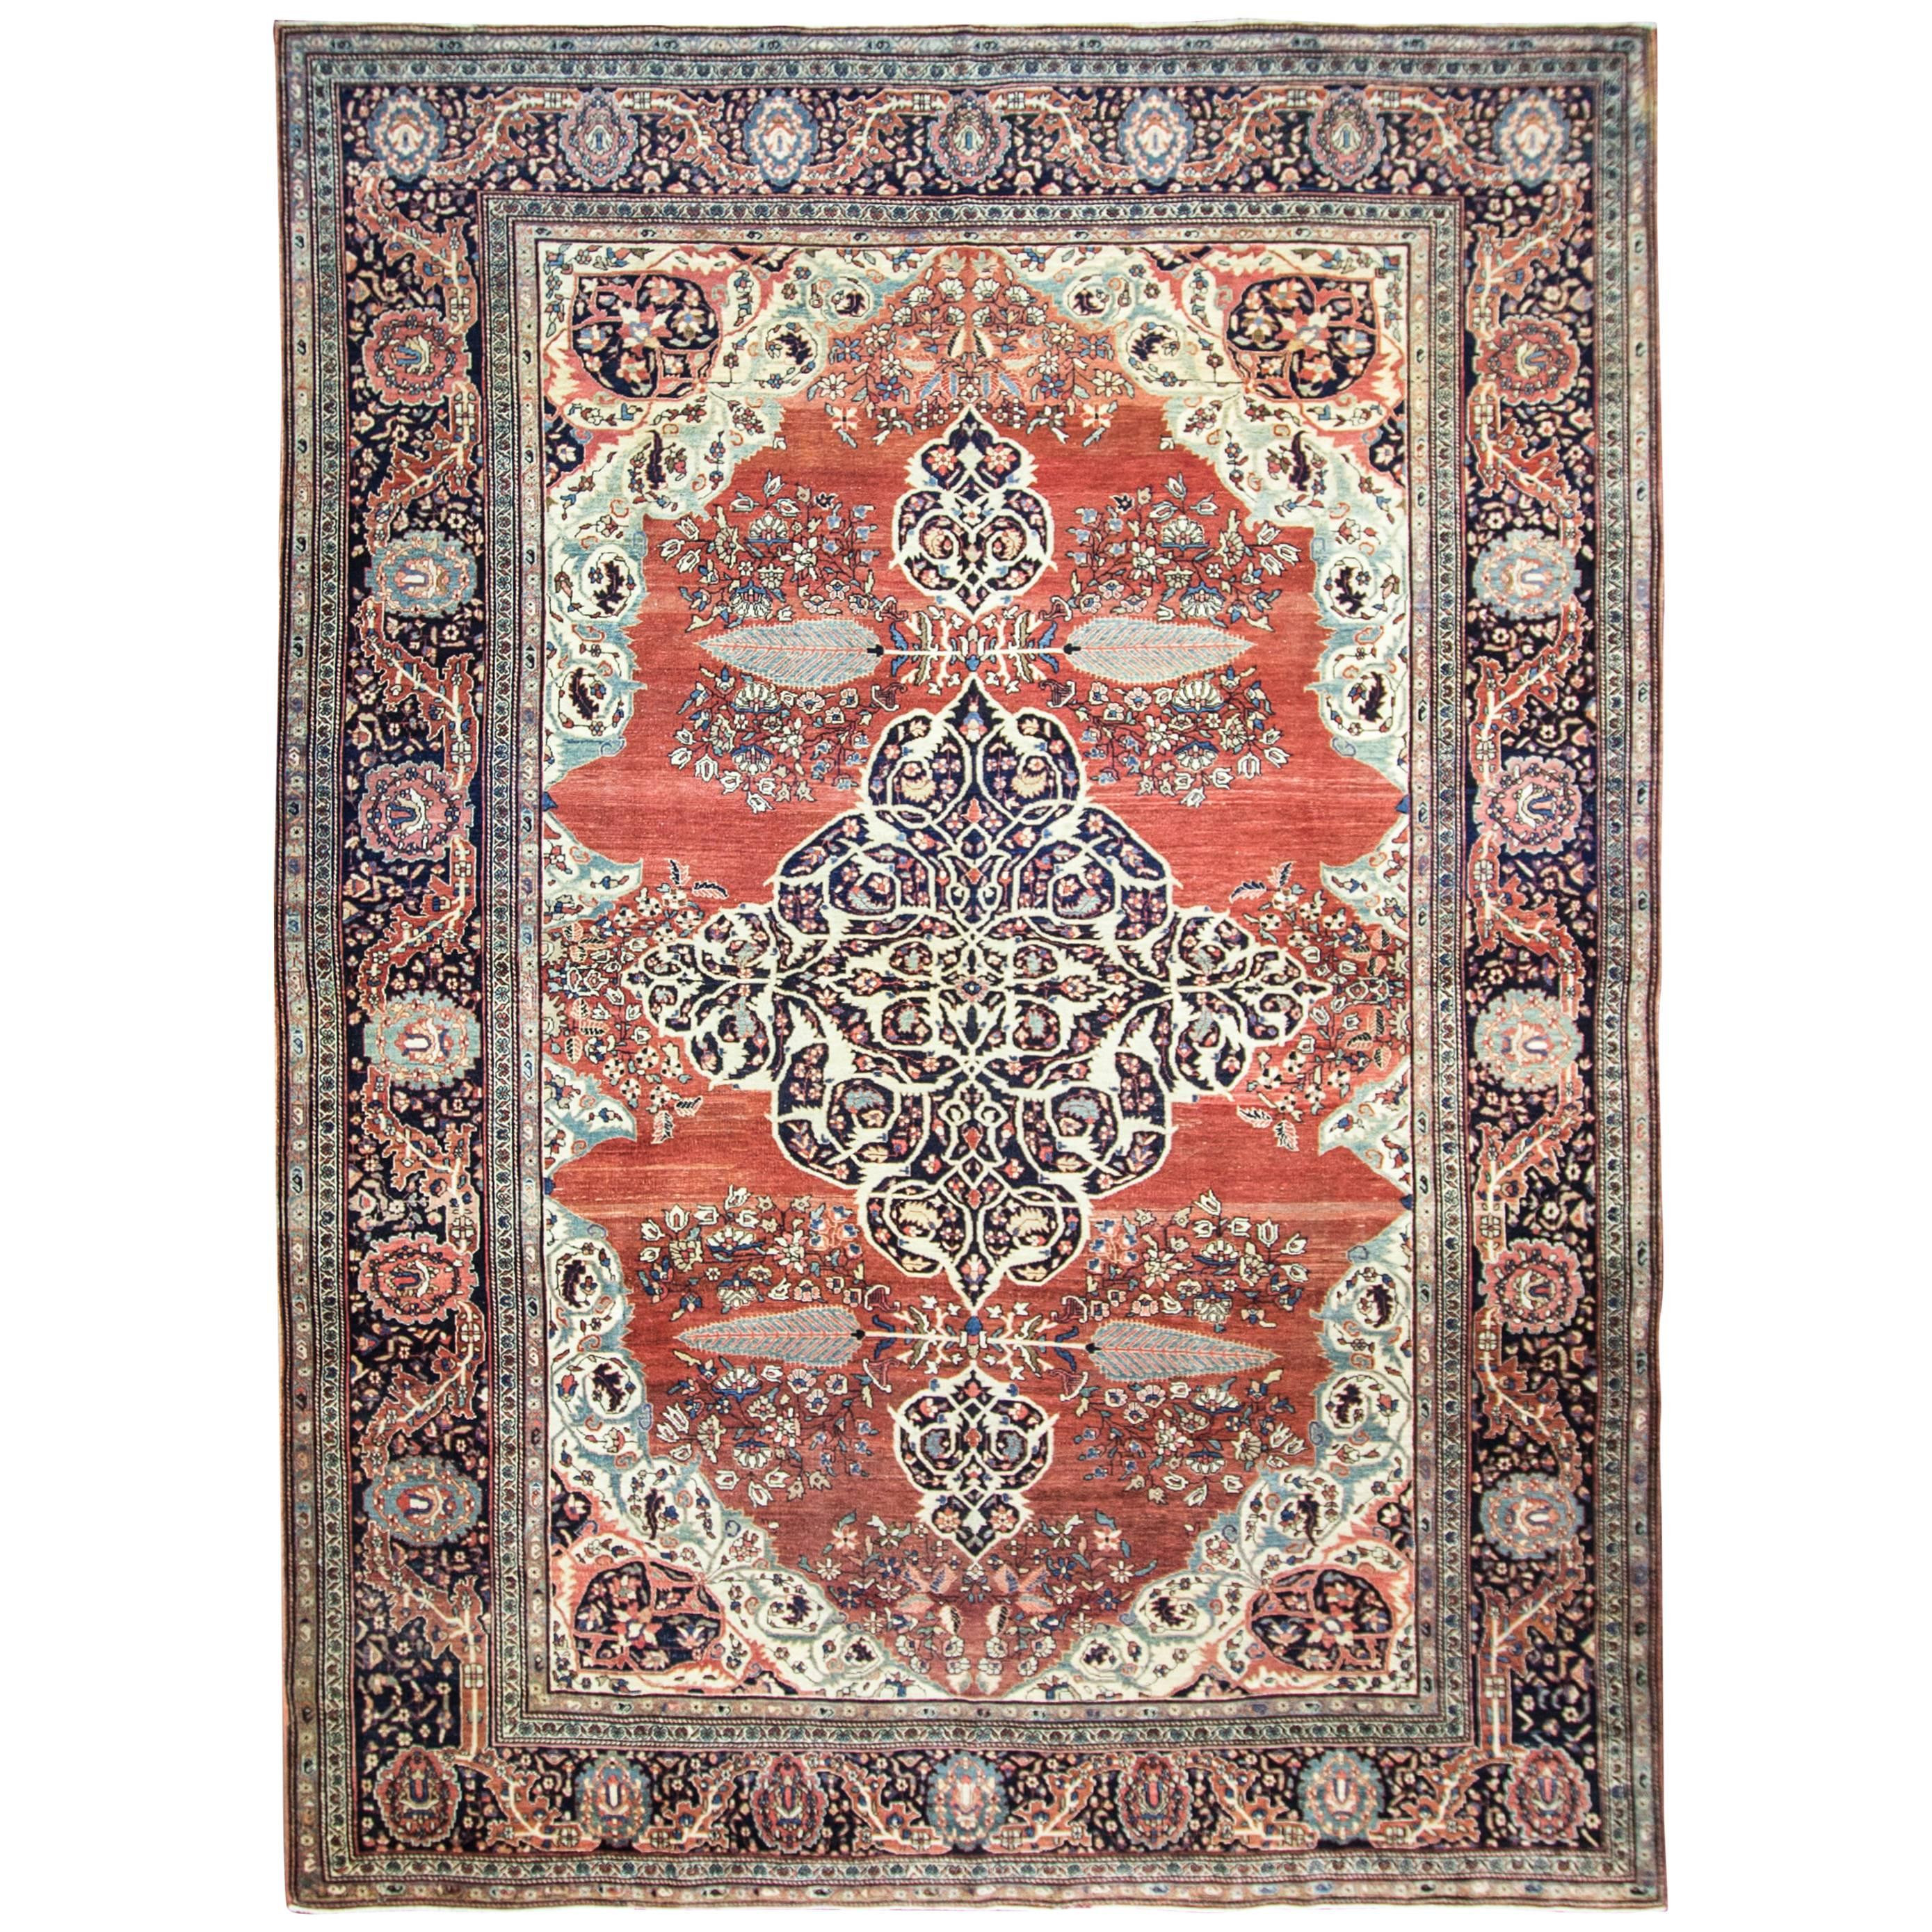  Antique Persian Feraghan Sarouk Carpet